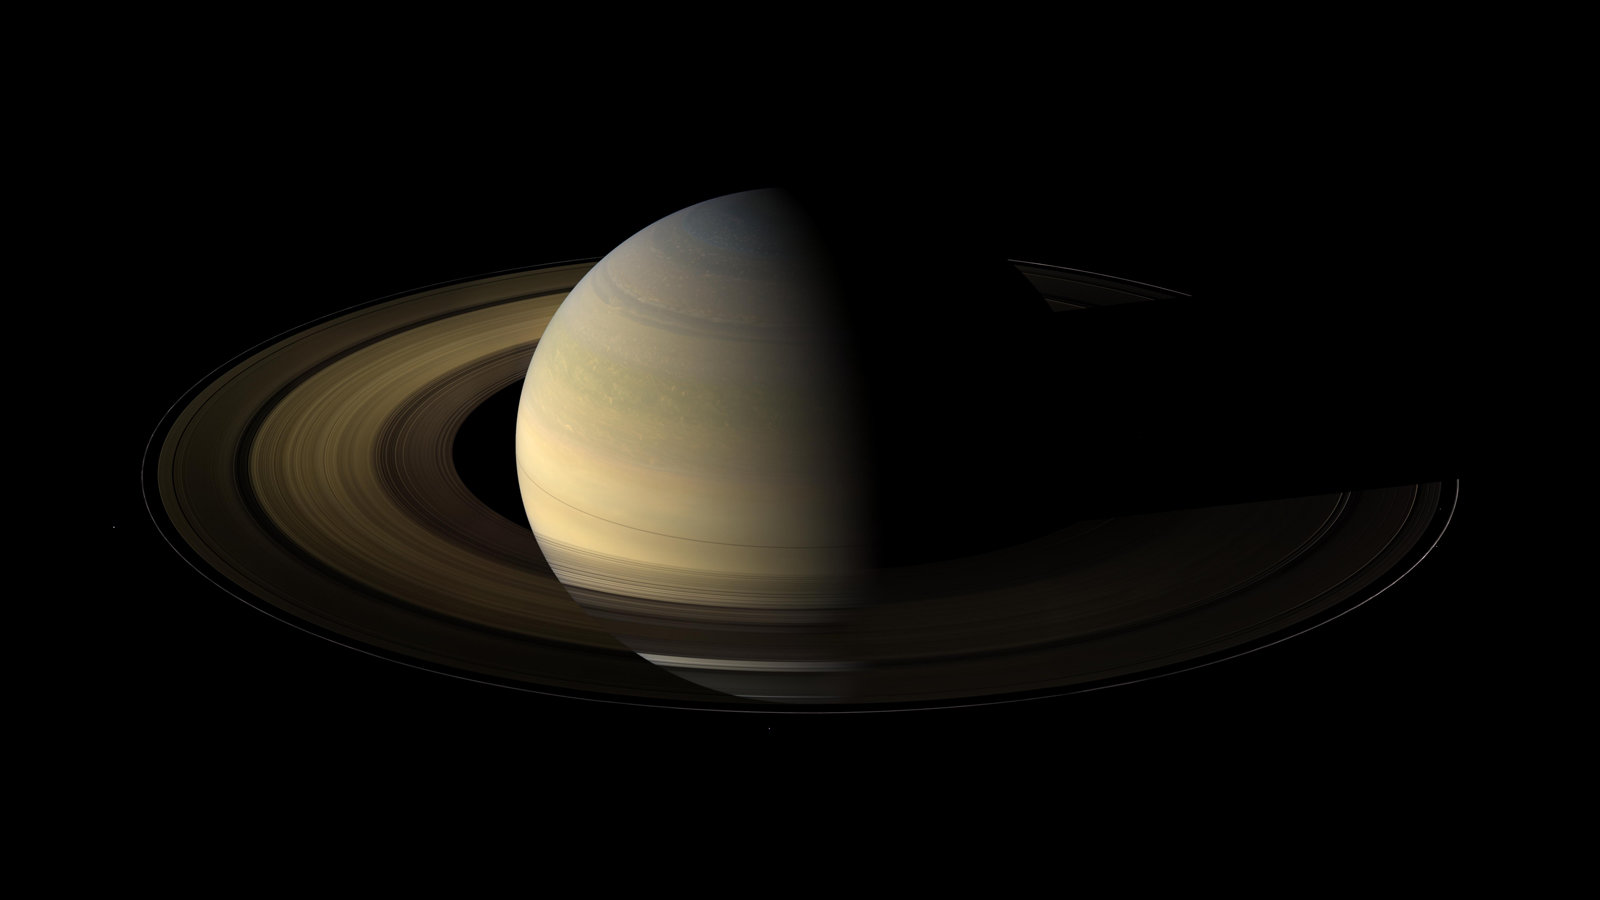 Son of Saturn Saturne